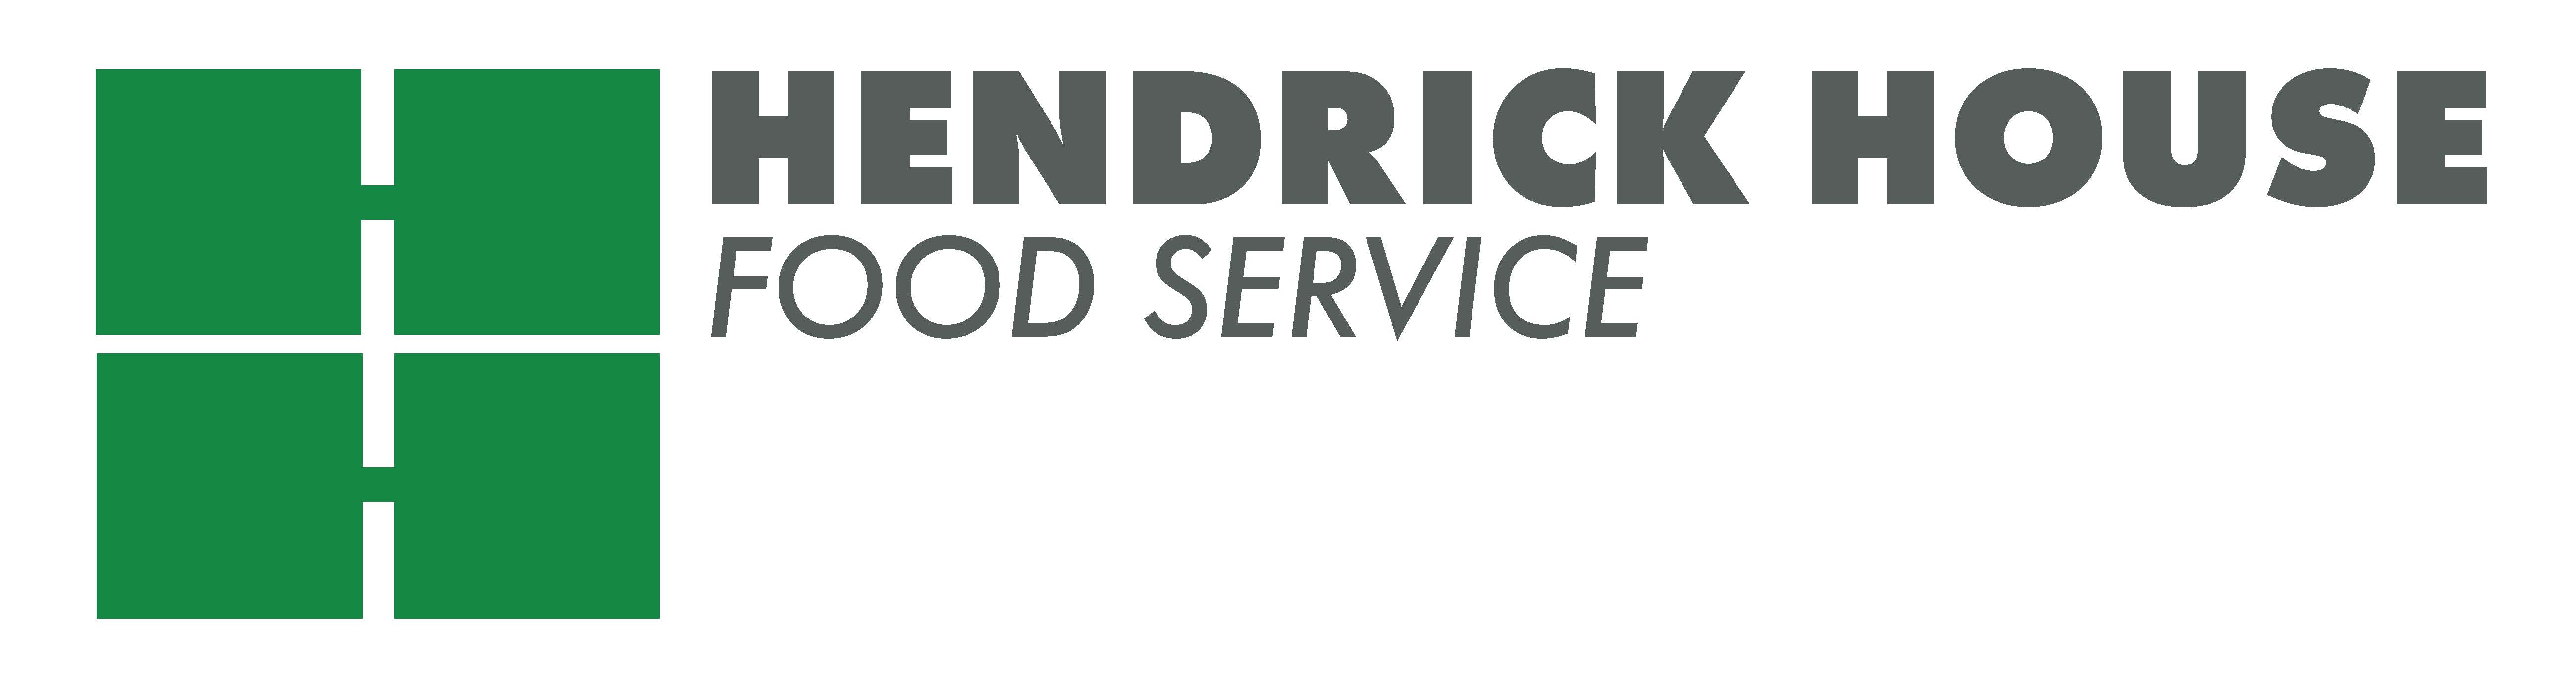 hendrick house food service